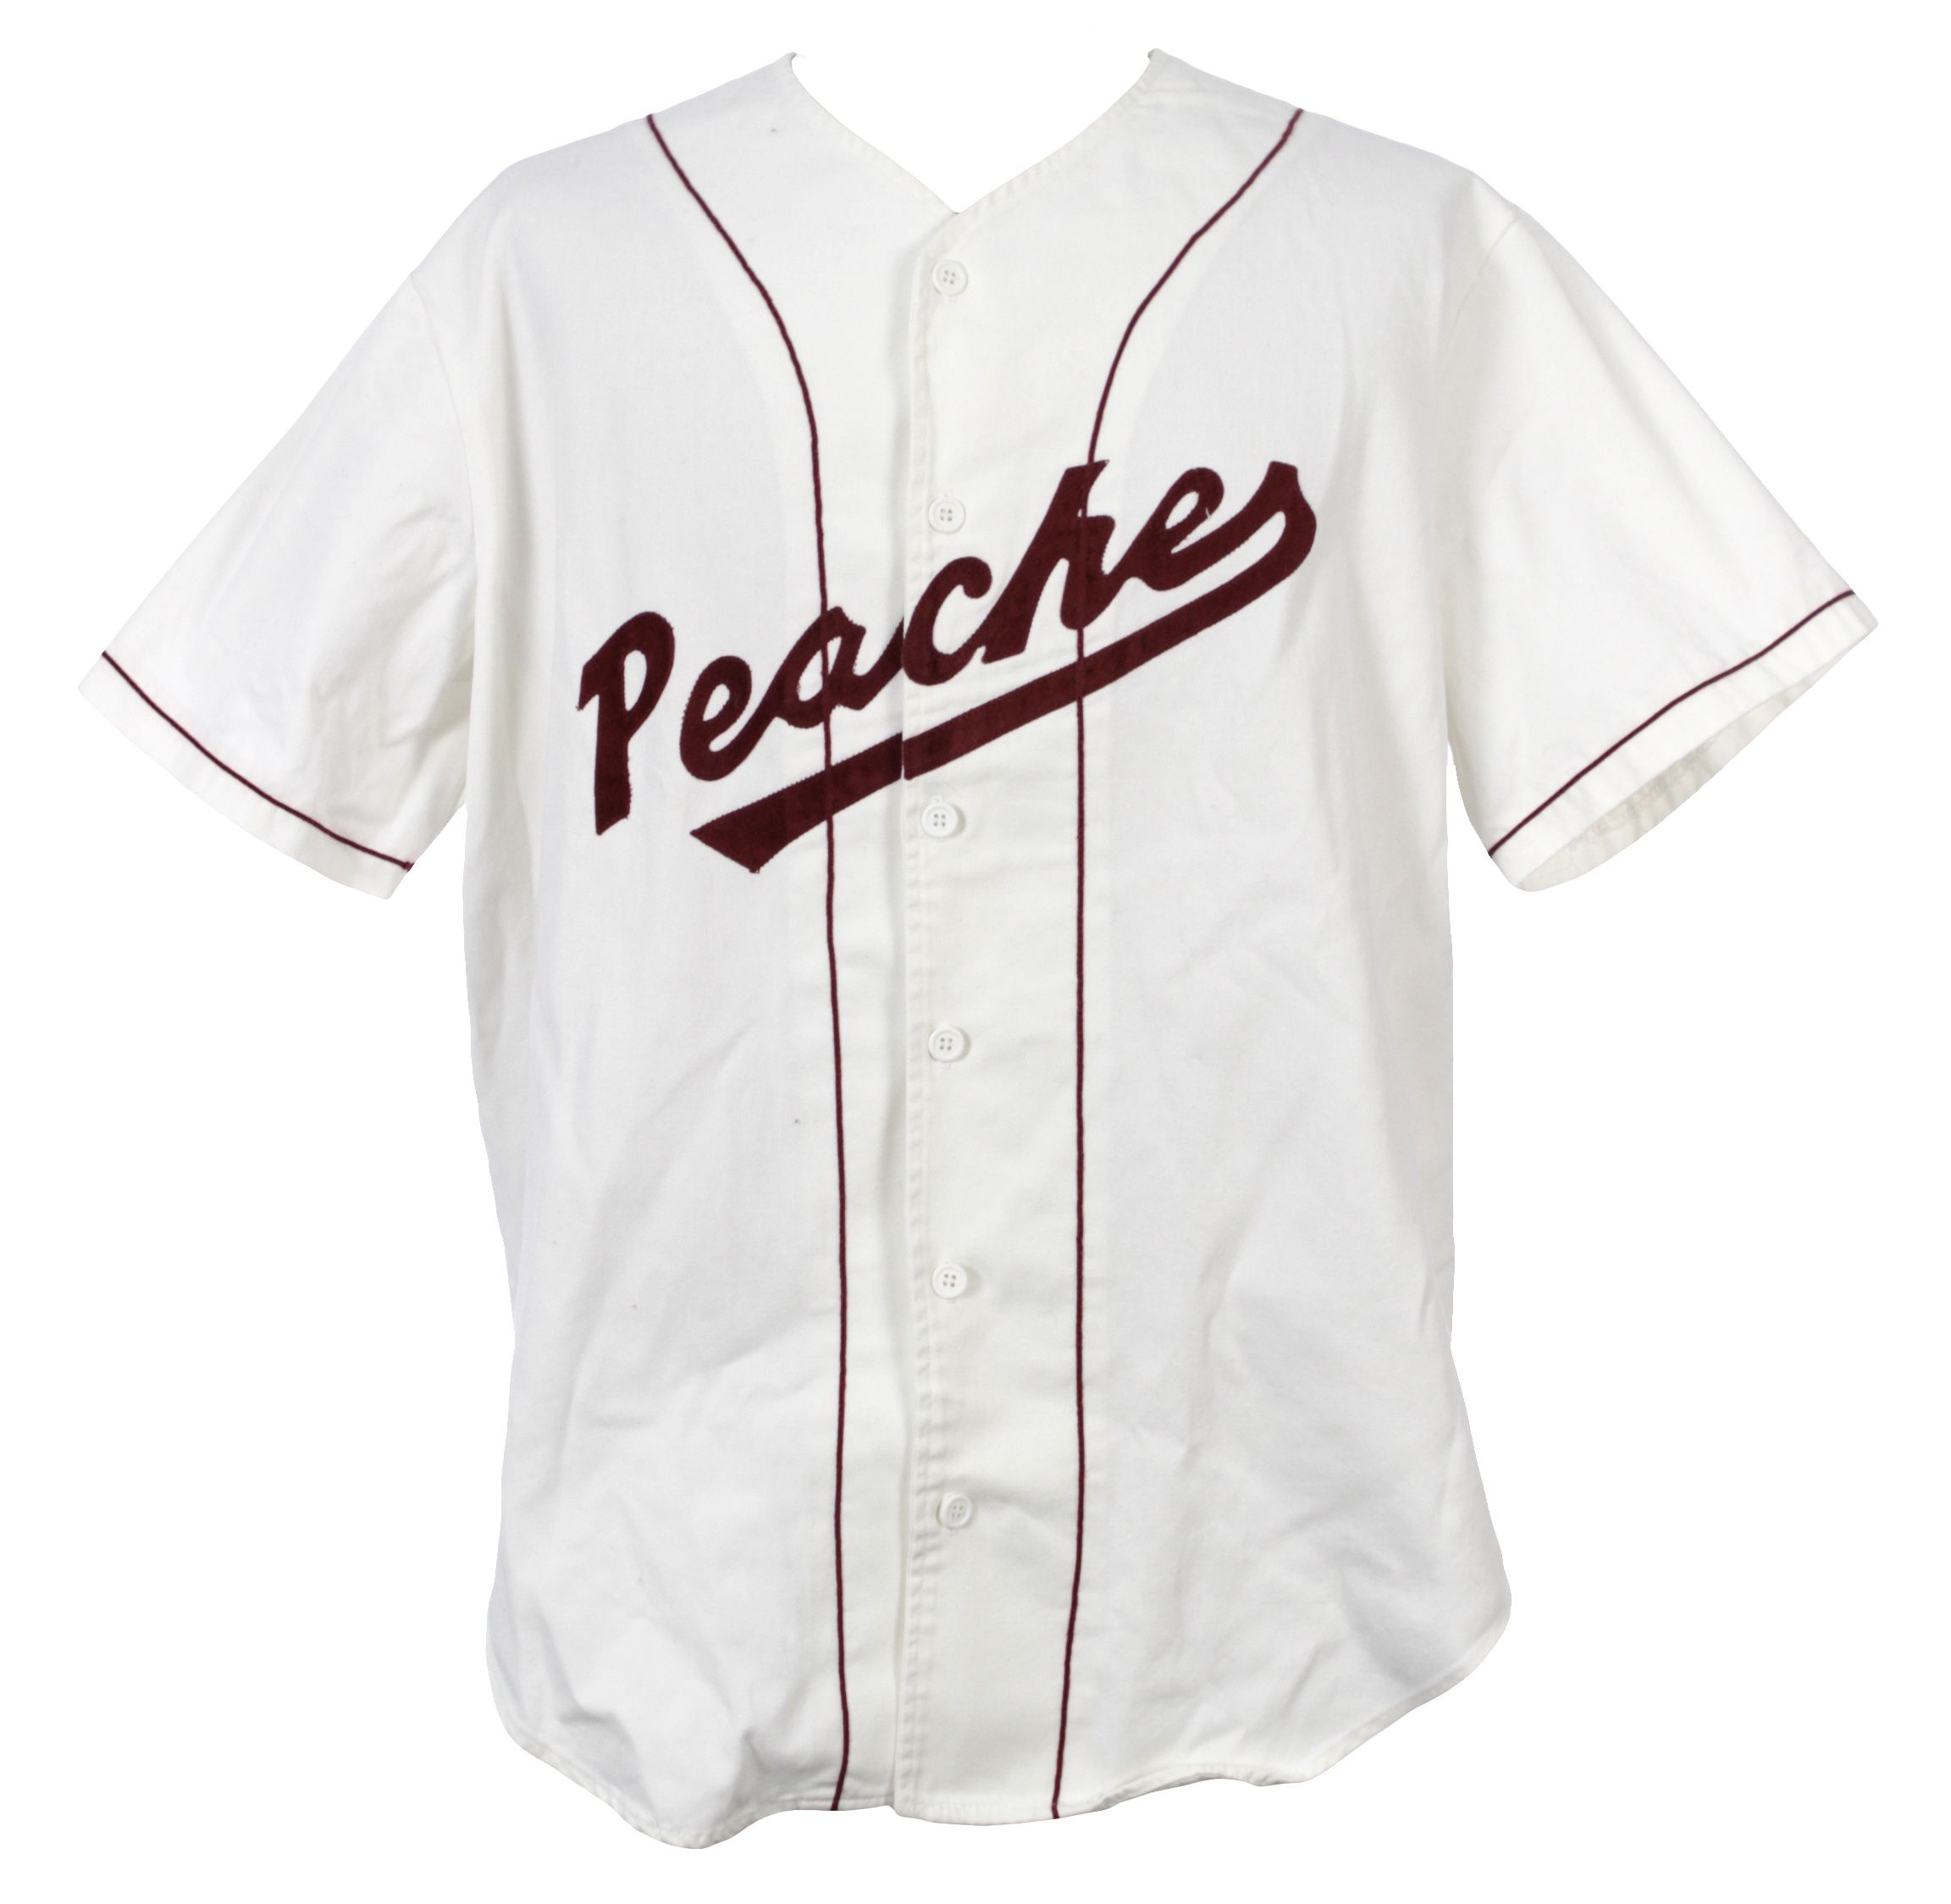 rockford peach jersey